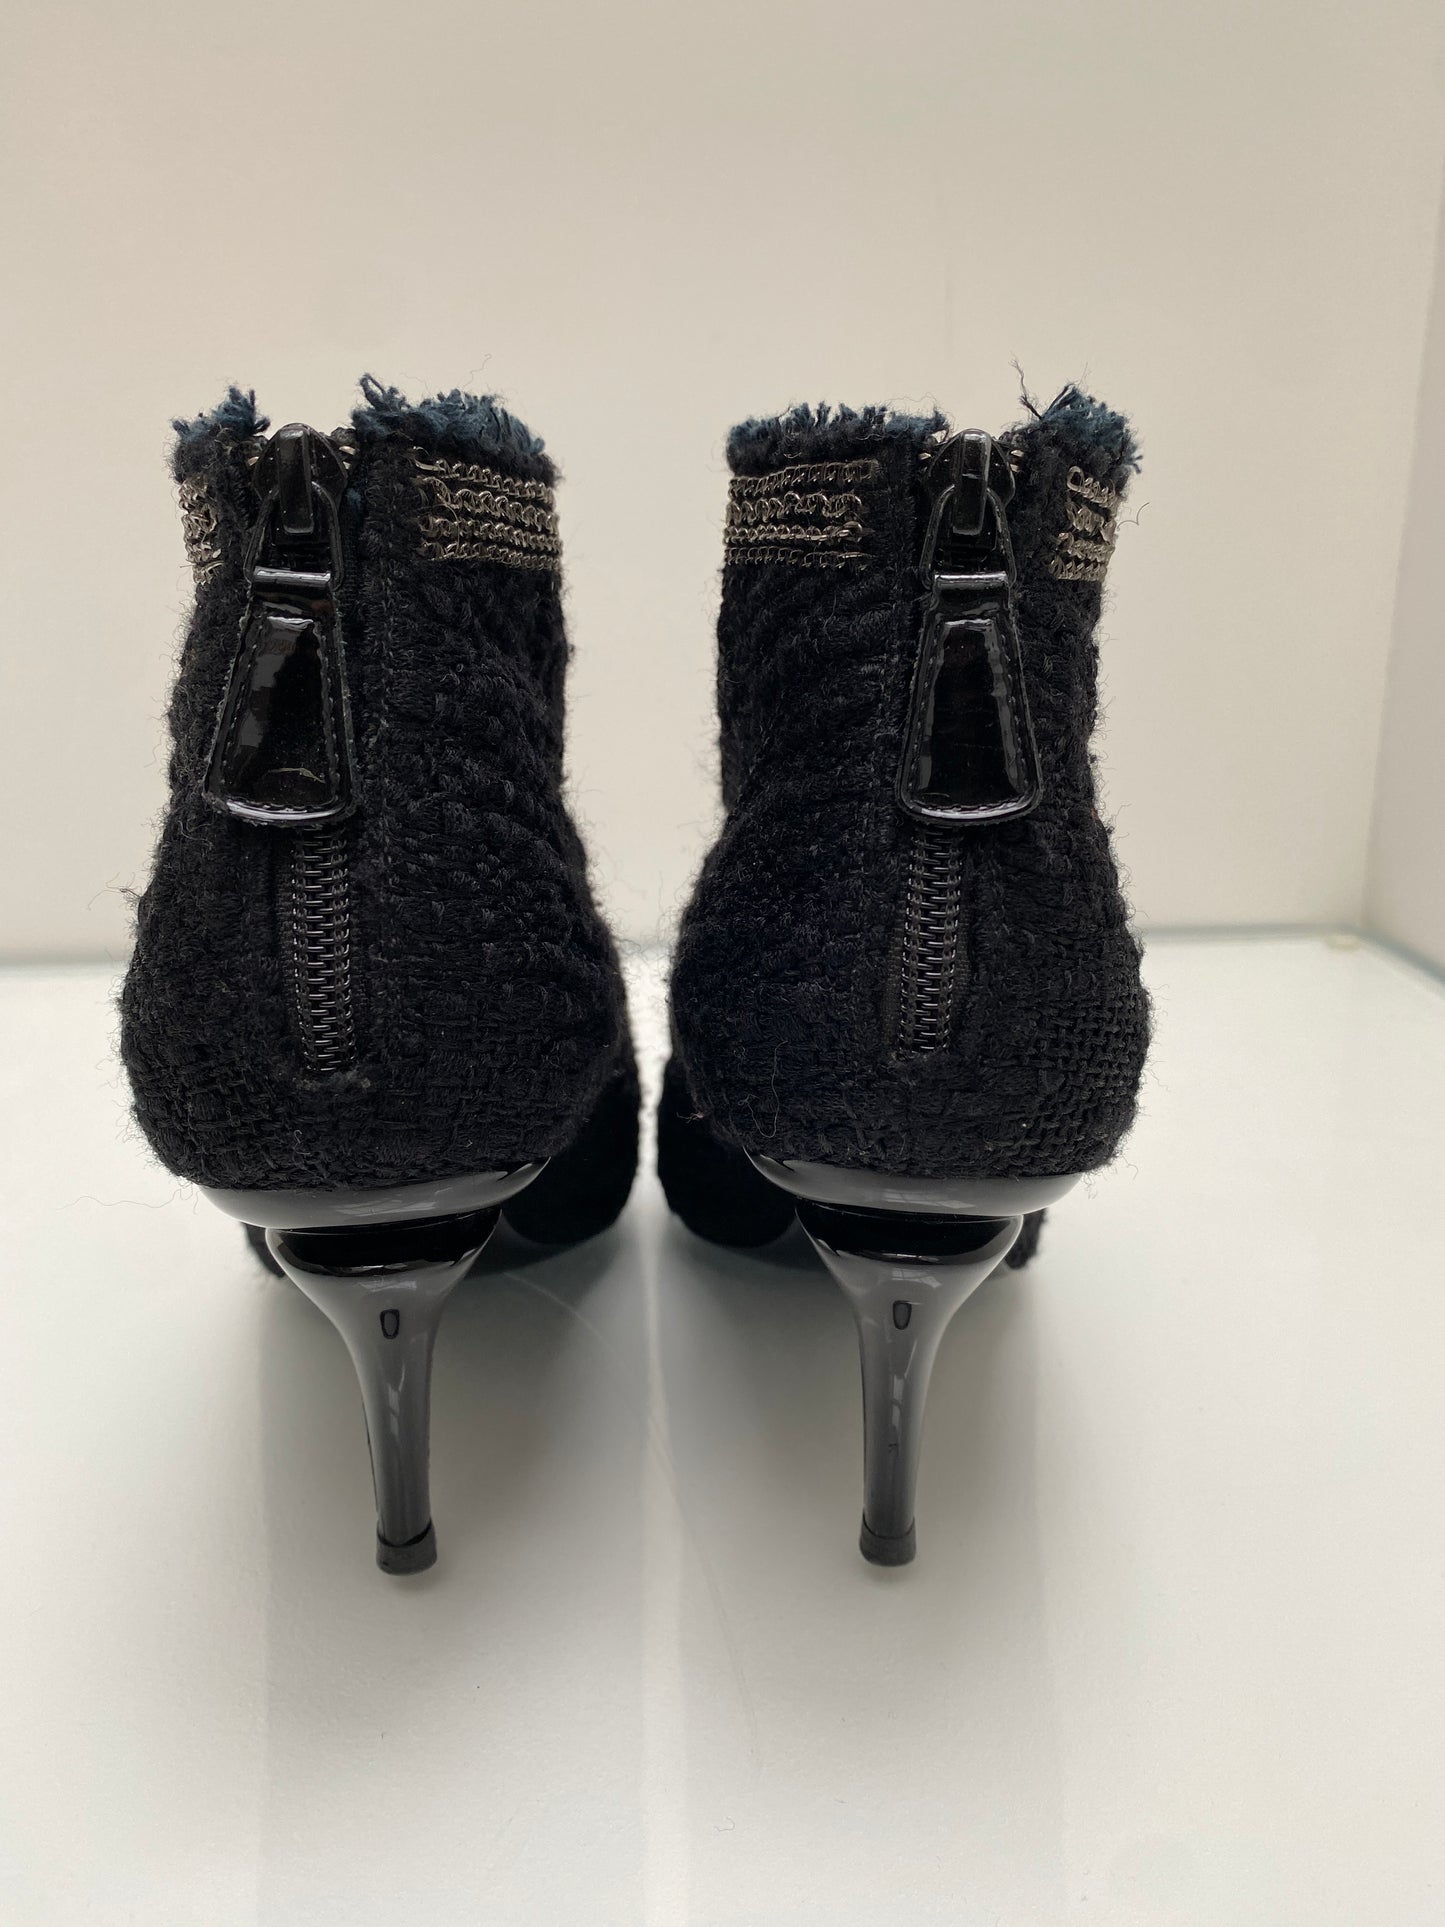 Chanel Tweed/Chain Black Booties, Sz 38